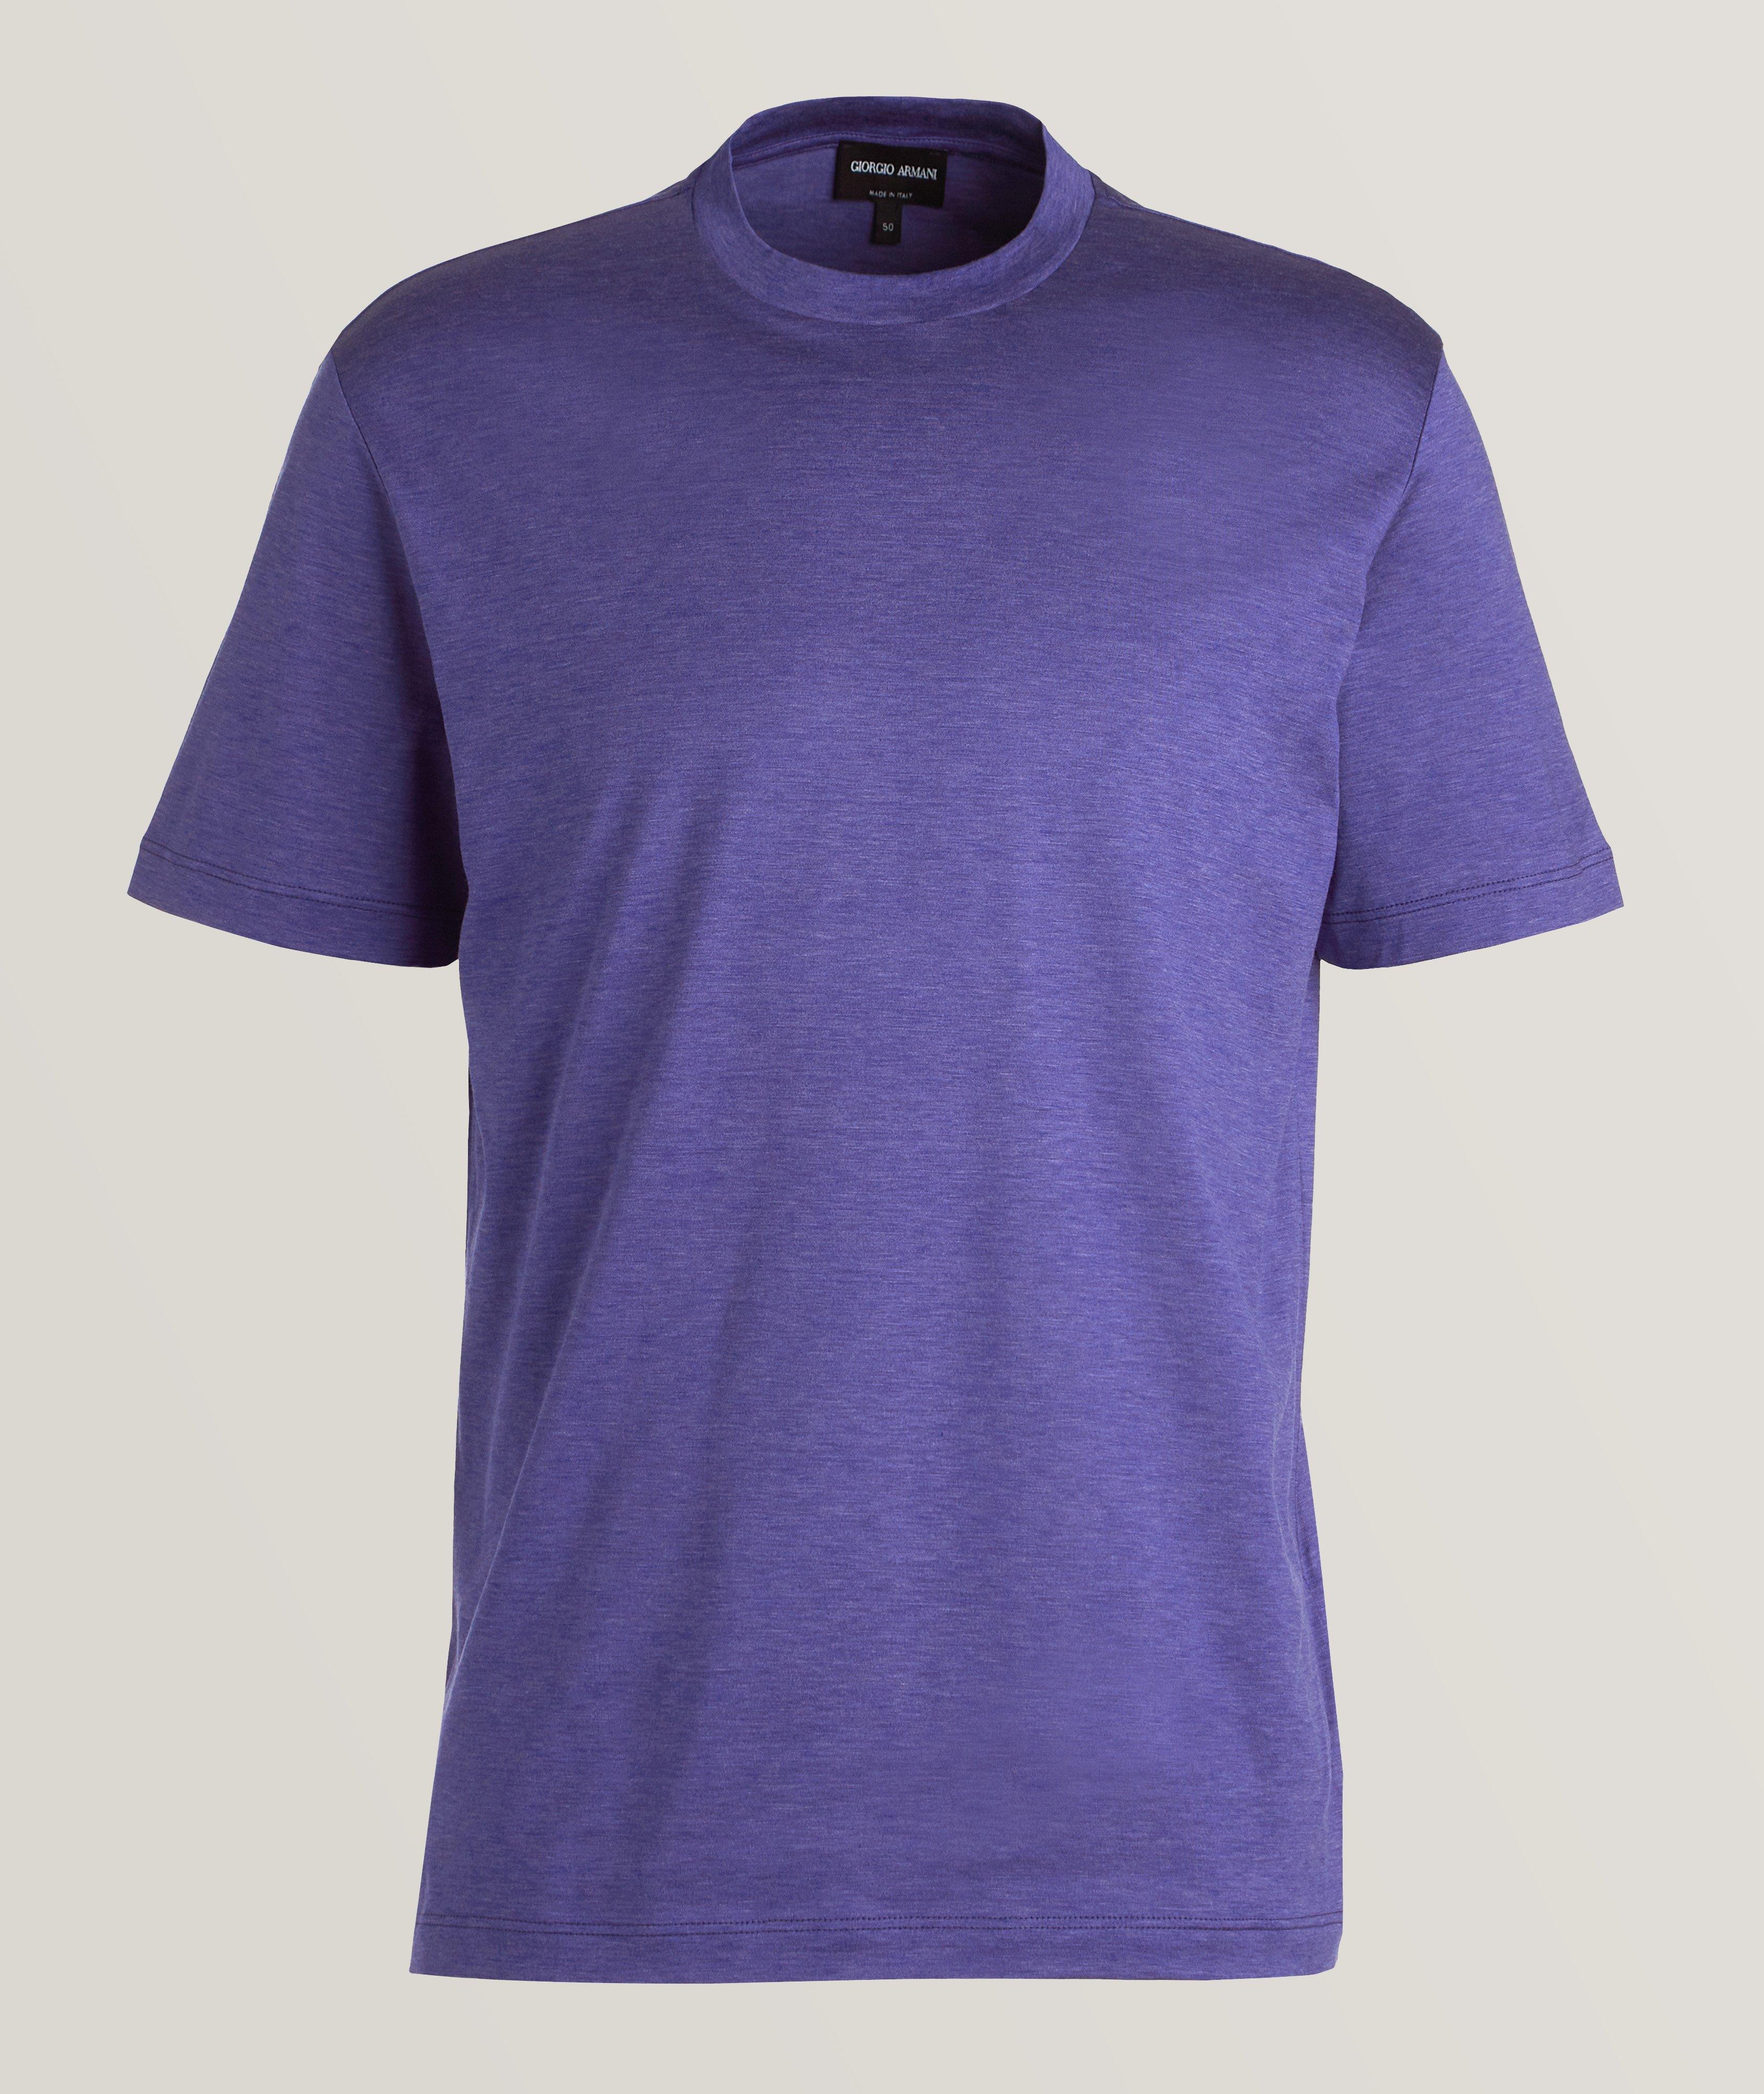 Heathered Jersey-Cotton Silk T-Shirt image 0